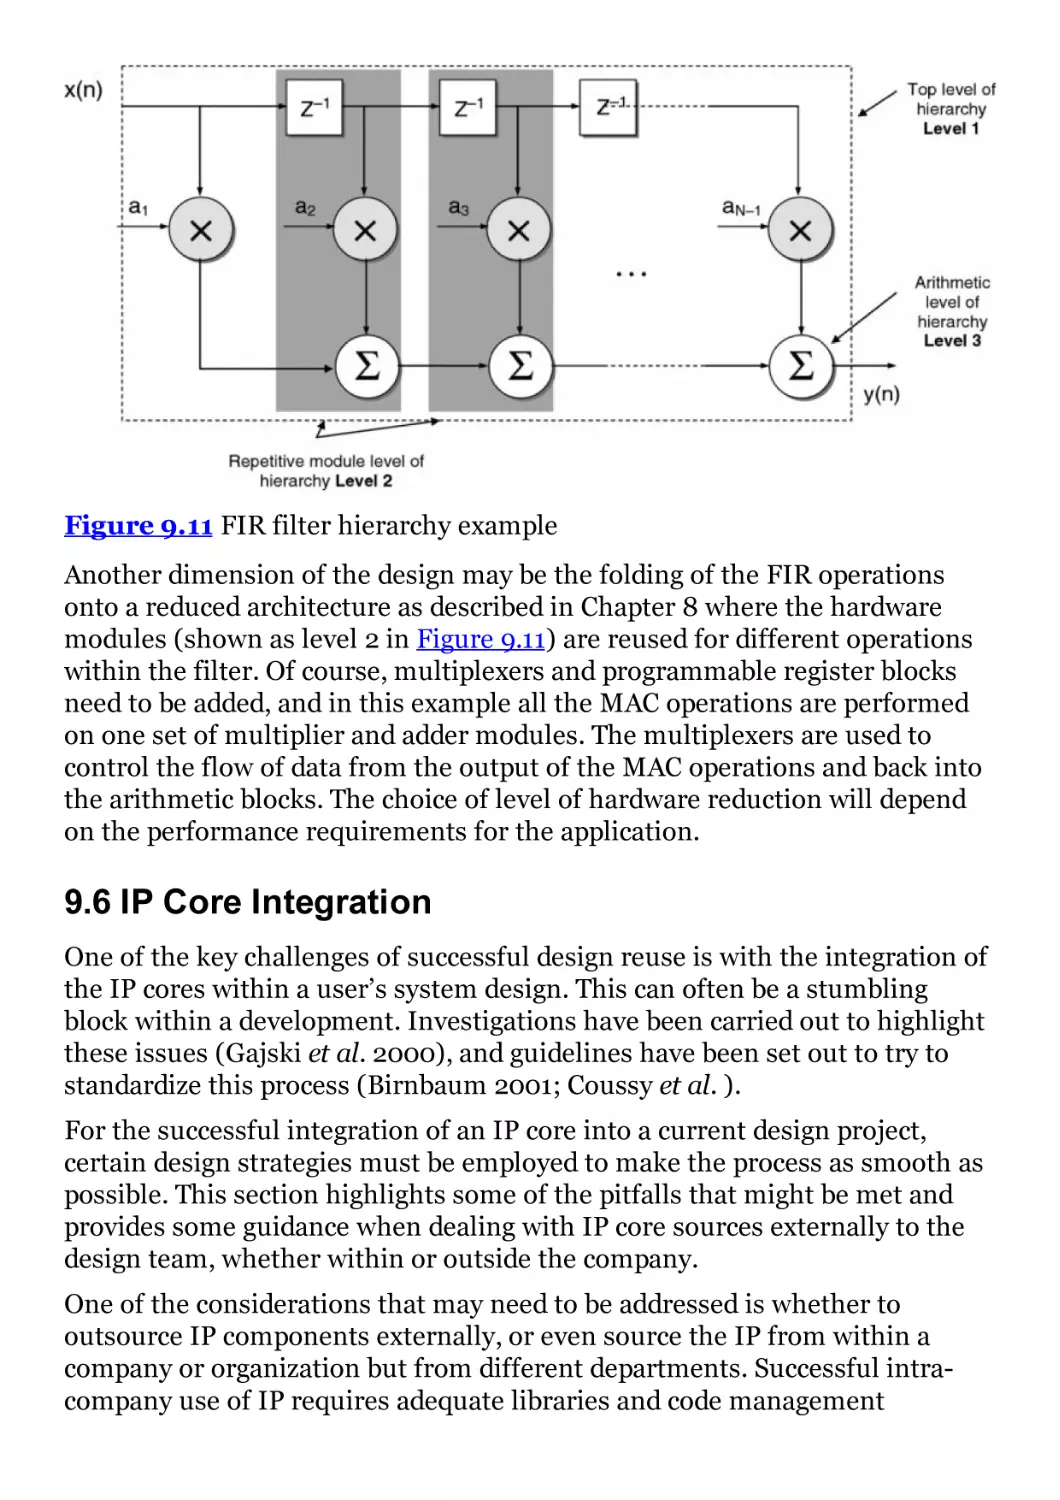 9.6 IP Core Integration